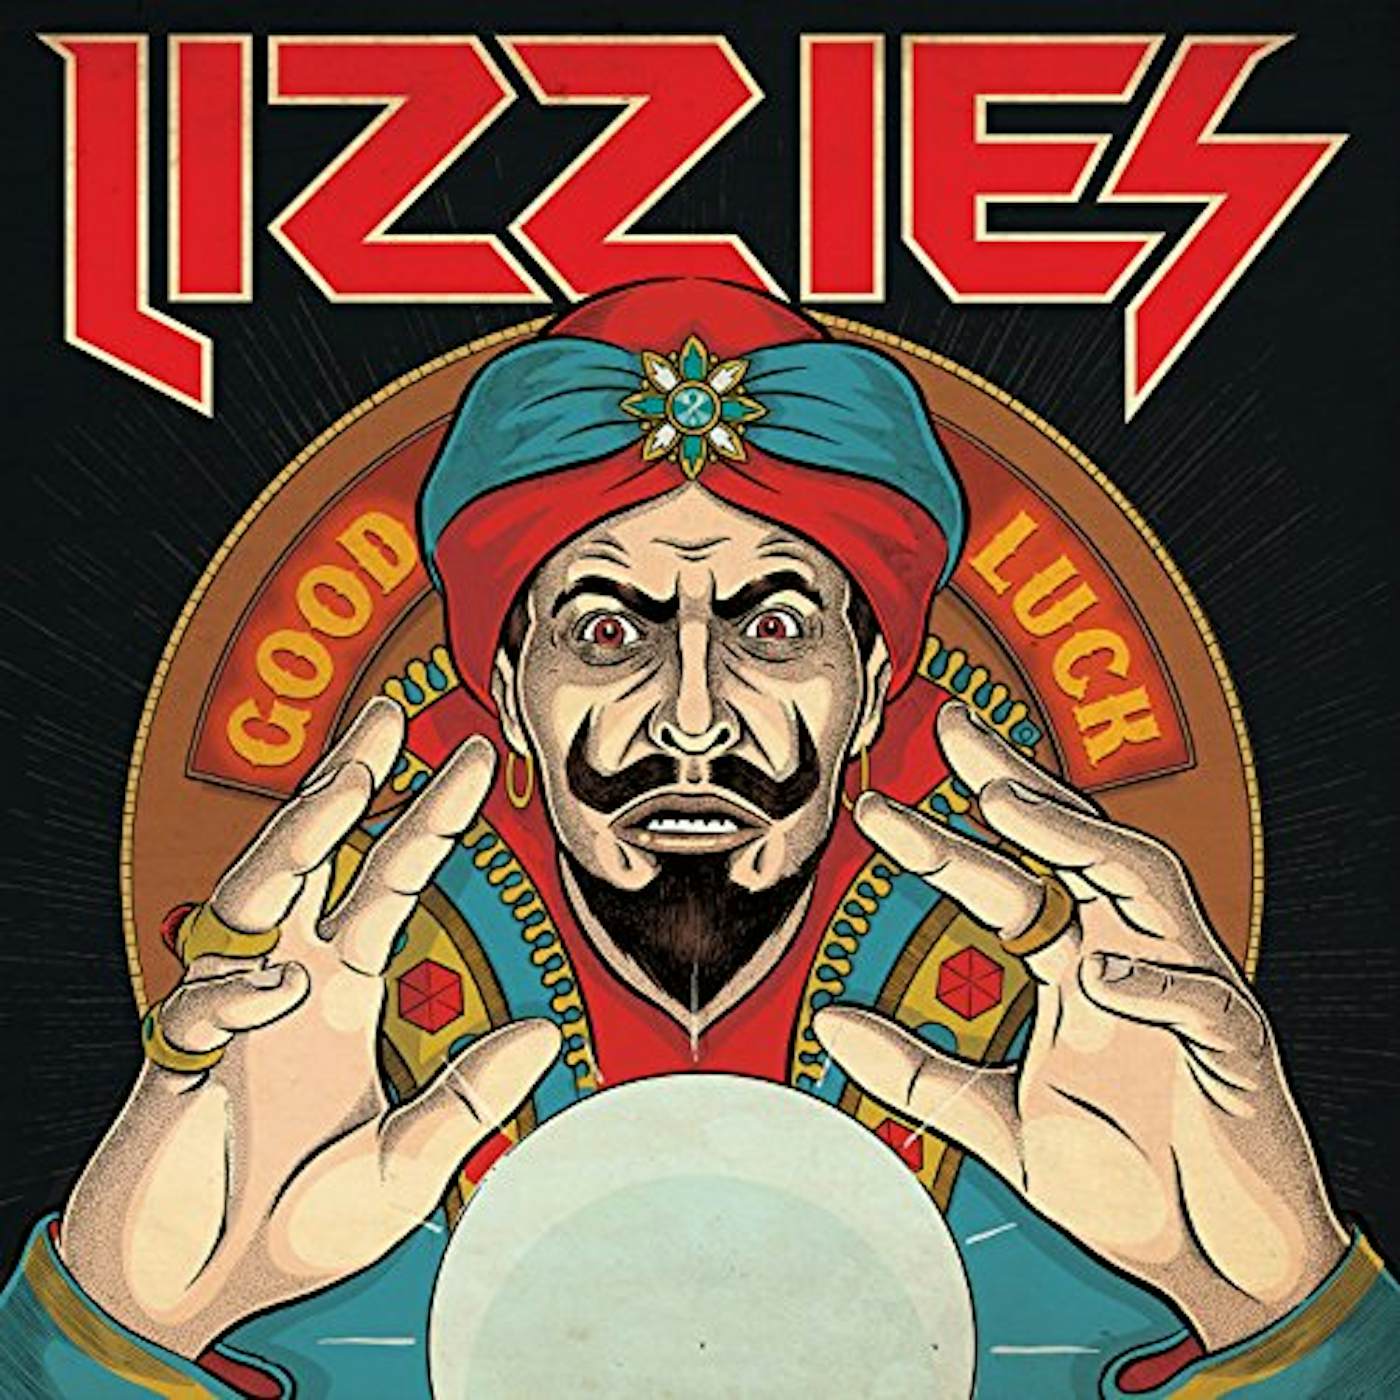 Lizzies Good Luck Vinyl Record